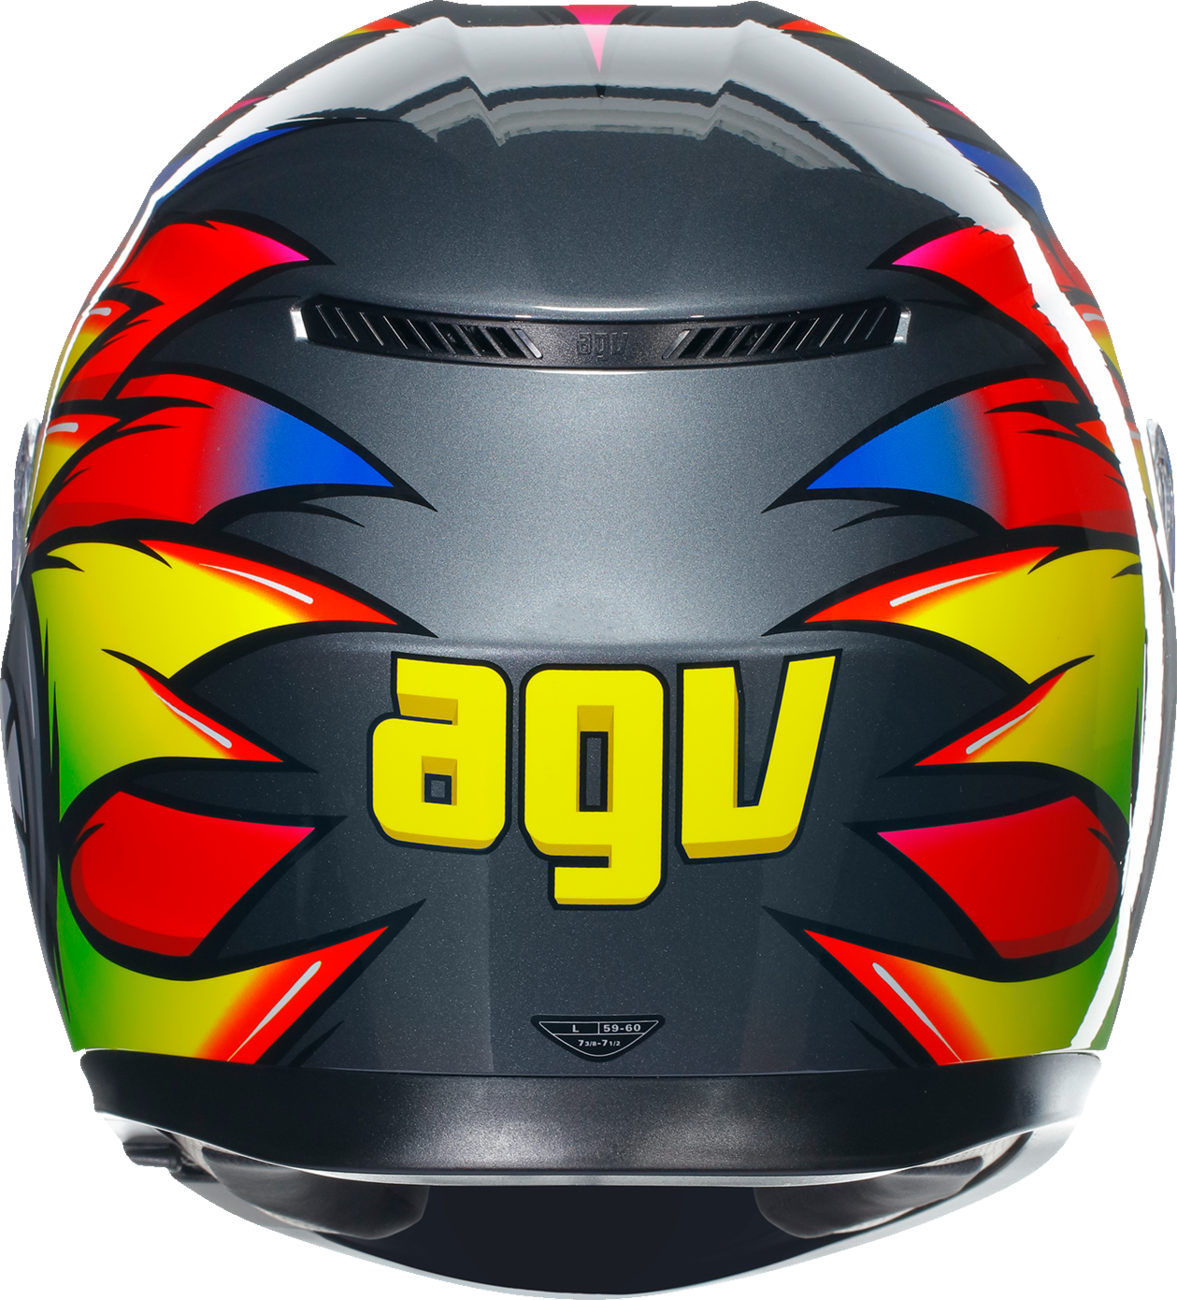 AGV K3 Helmet - Birdy 2.0 - Gray/Yellow/Red - Small 2118381004012S